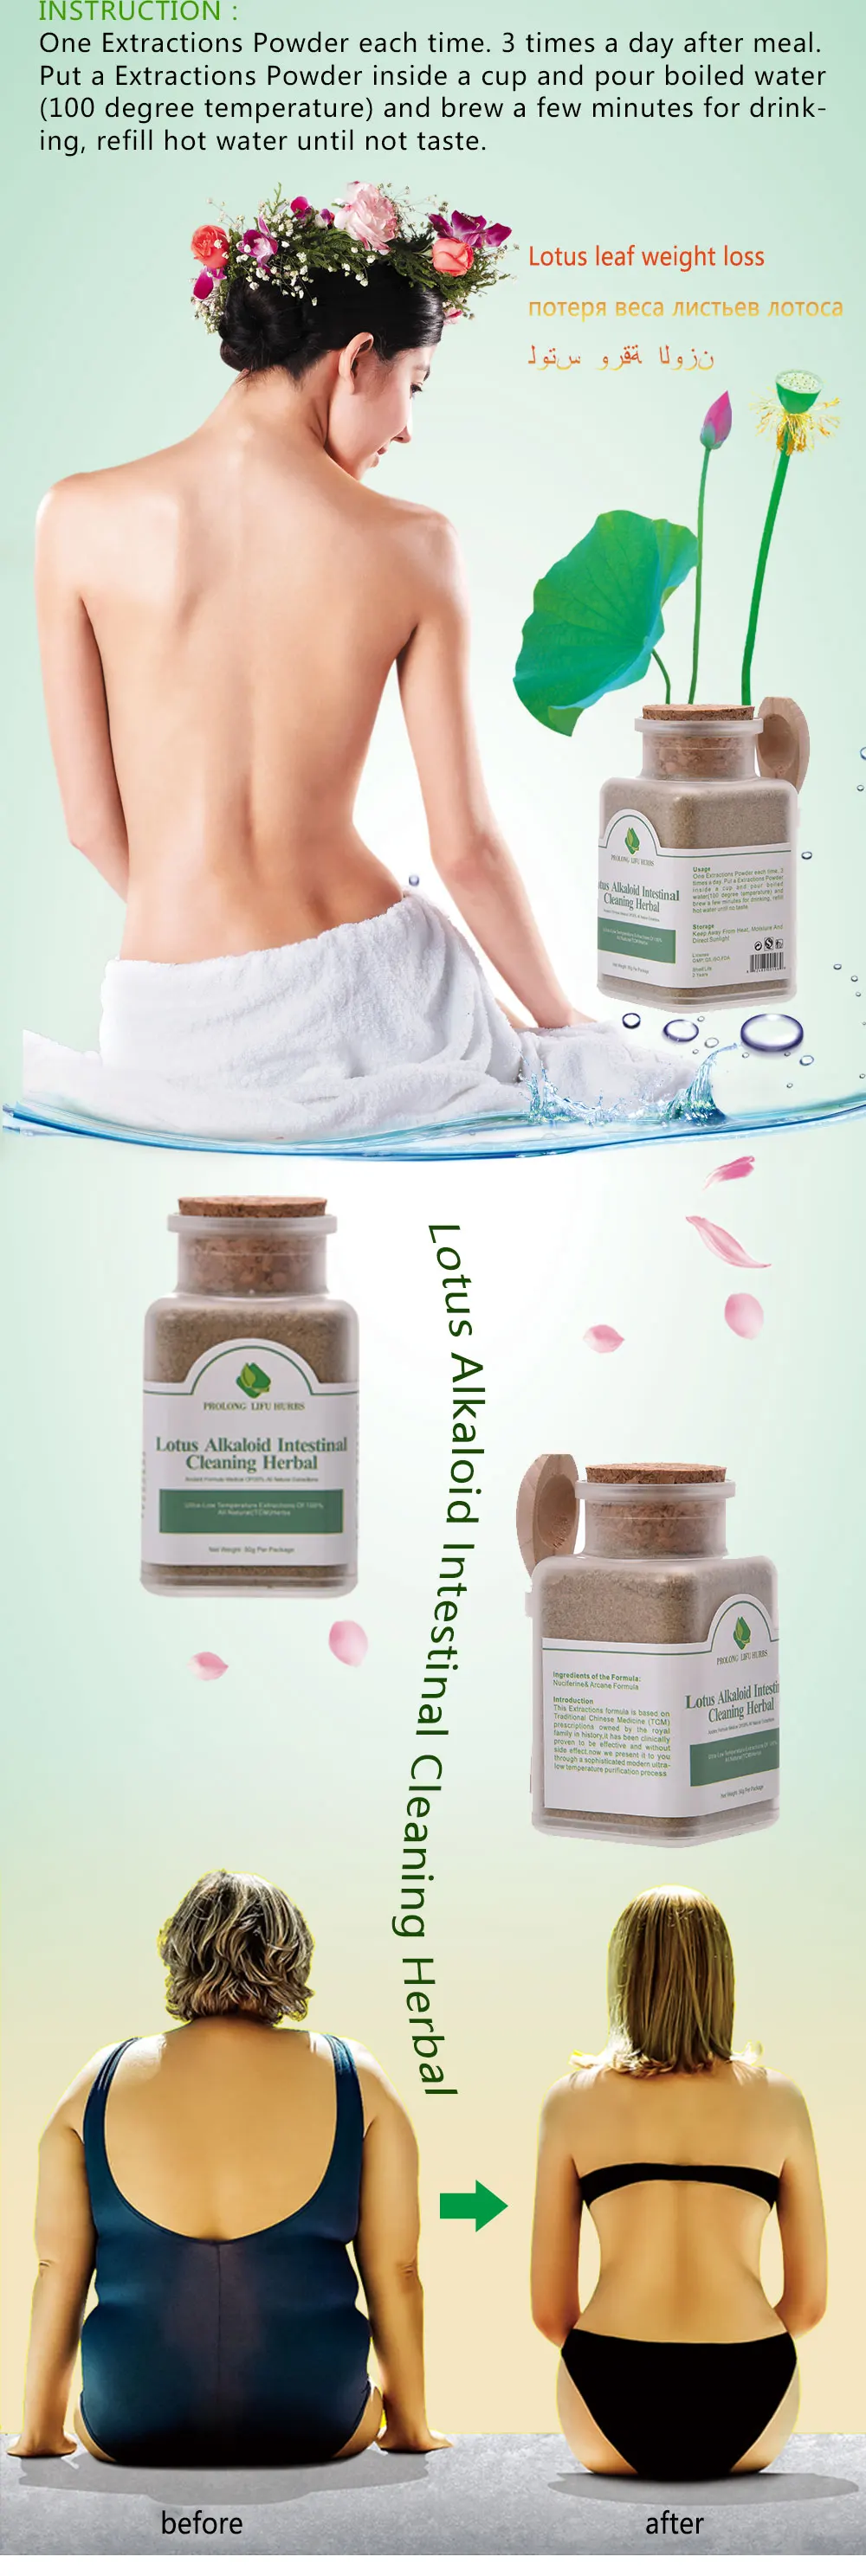 Prolong Lifu Lotus Alkaloid Intestinal Cleansing Herbal for Slimming, Detox Slim Formula Weight Loss Burning Fat Powder